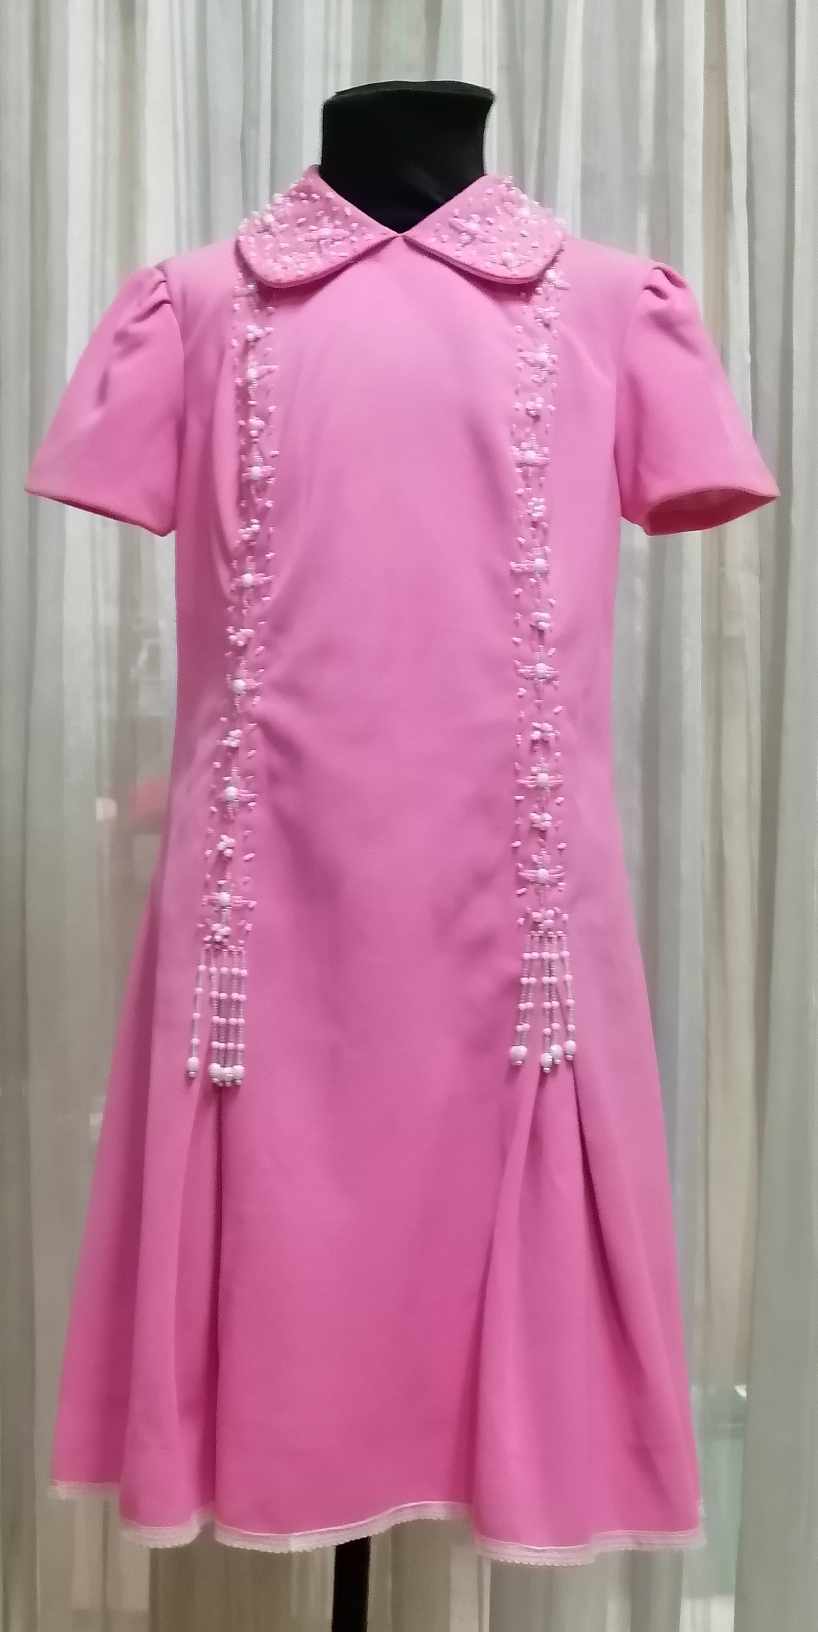 Retro Vintage Dress 1950s 1960s 1970s (Pink Dress)